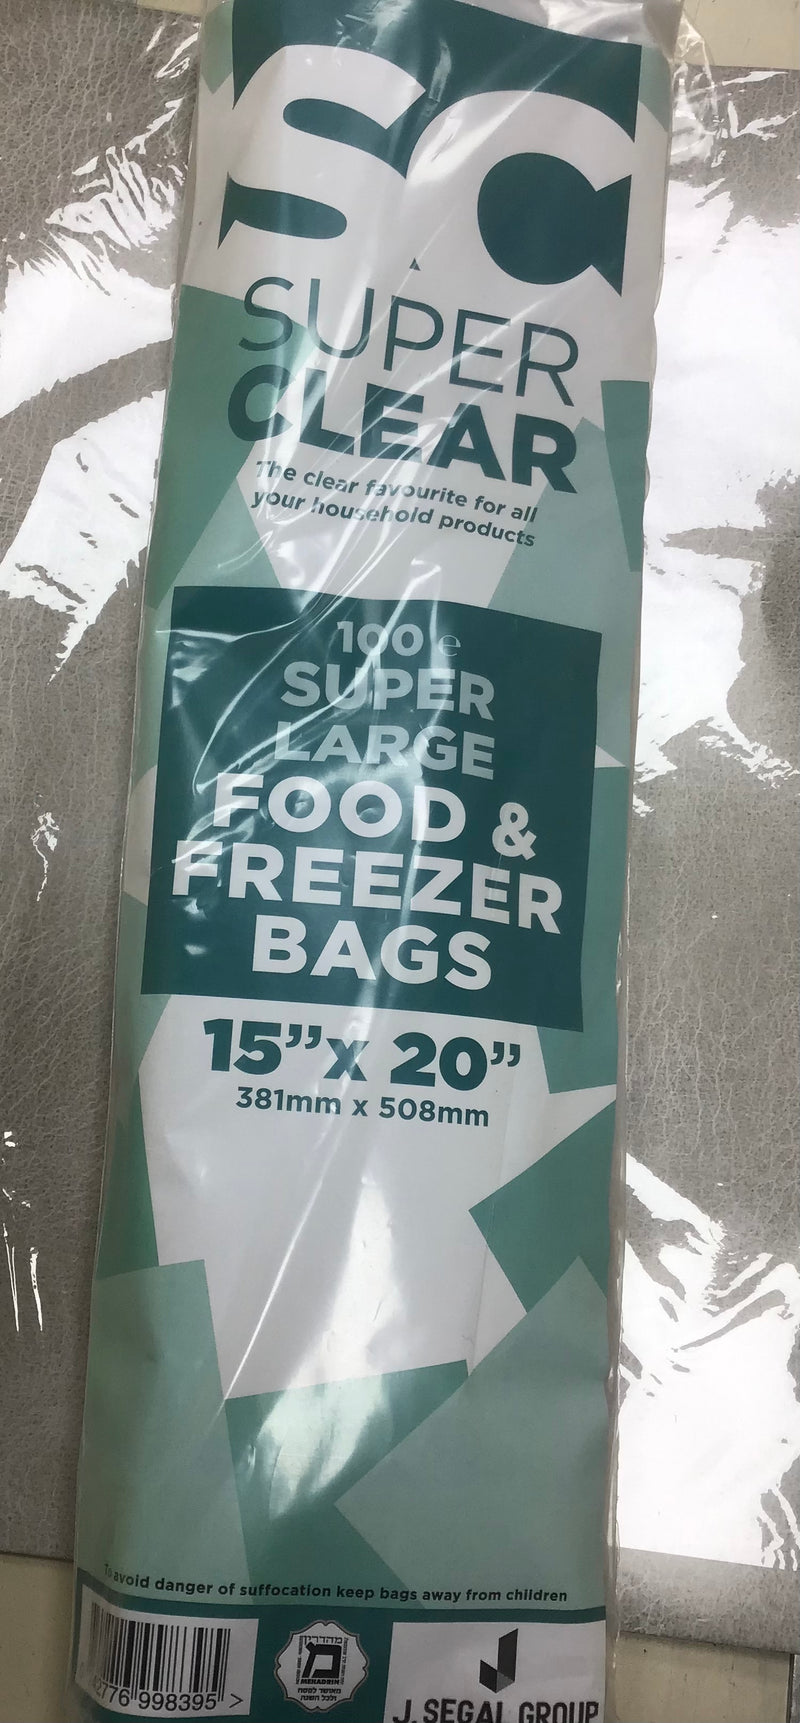 Super Clear Bags 15"x 20" 100pk